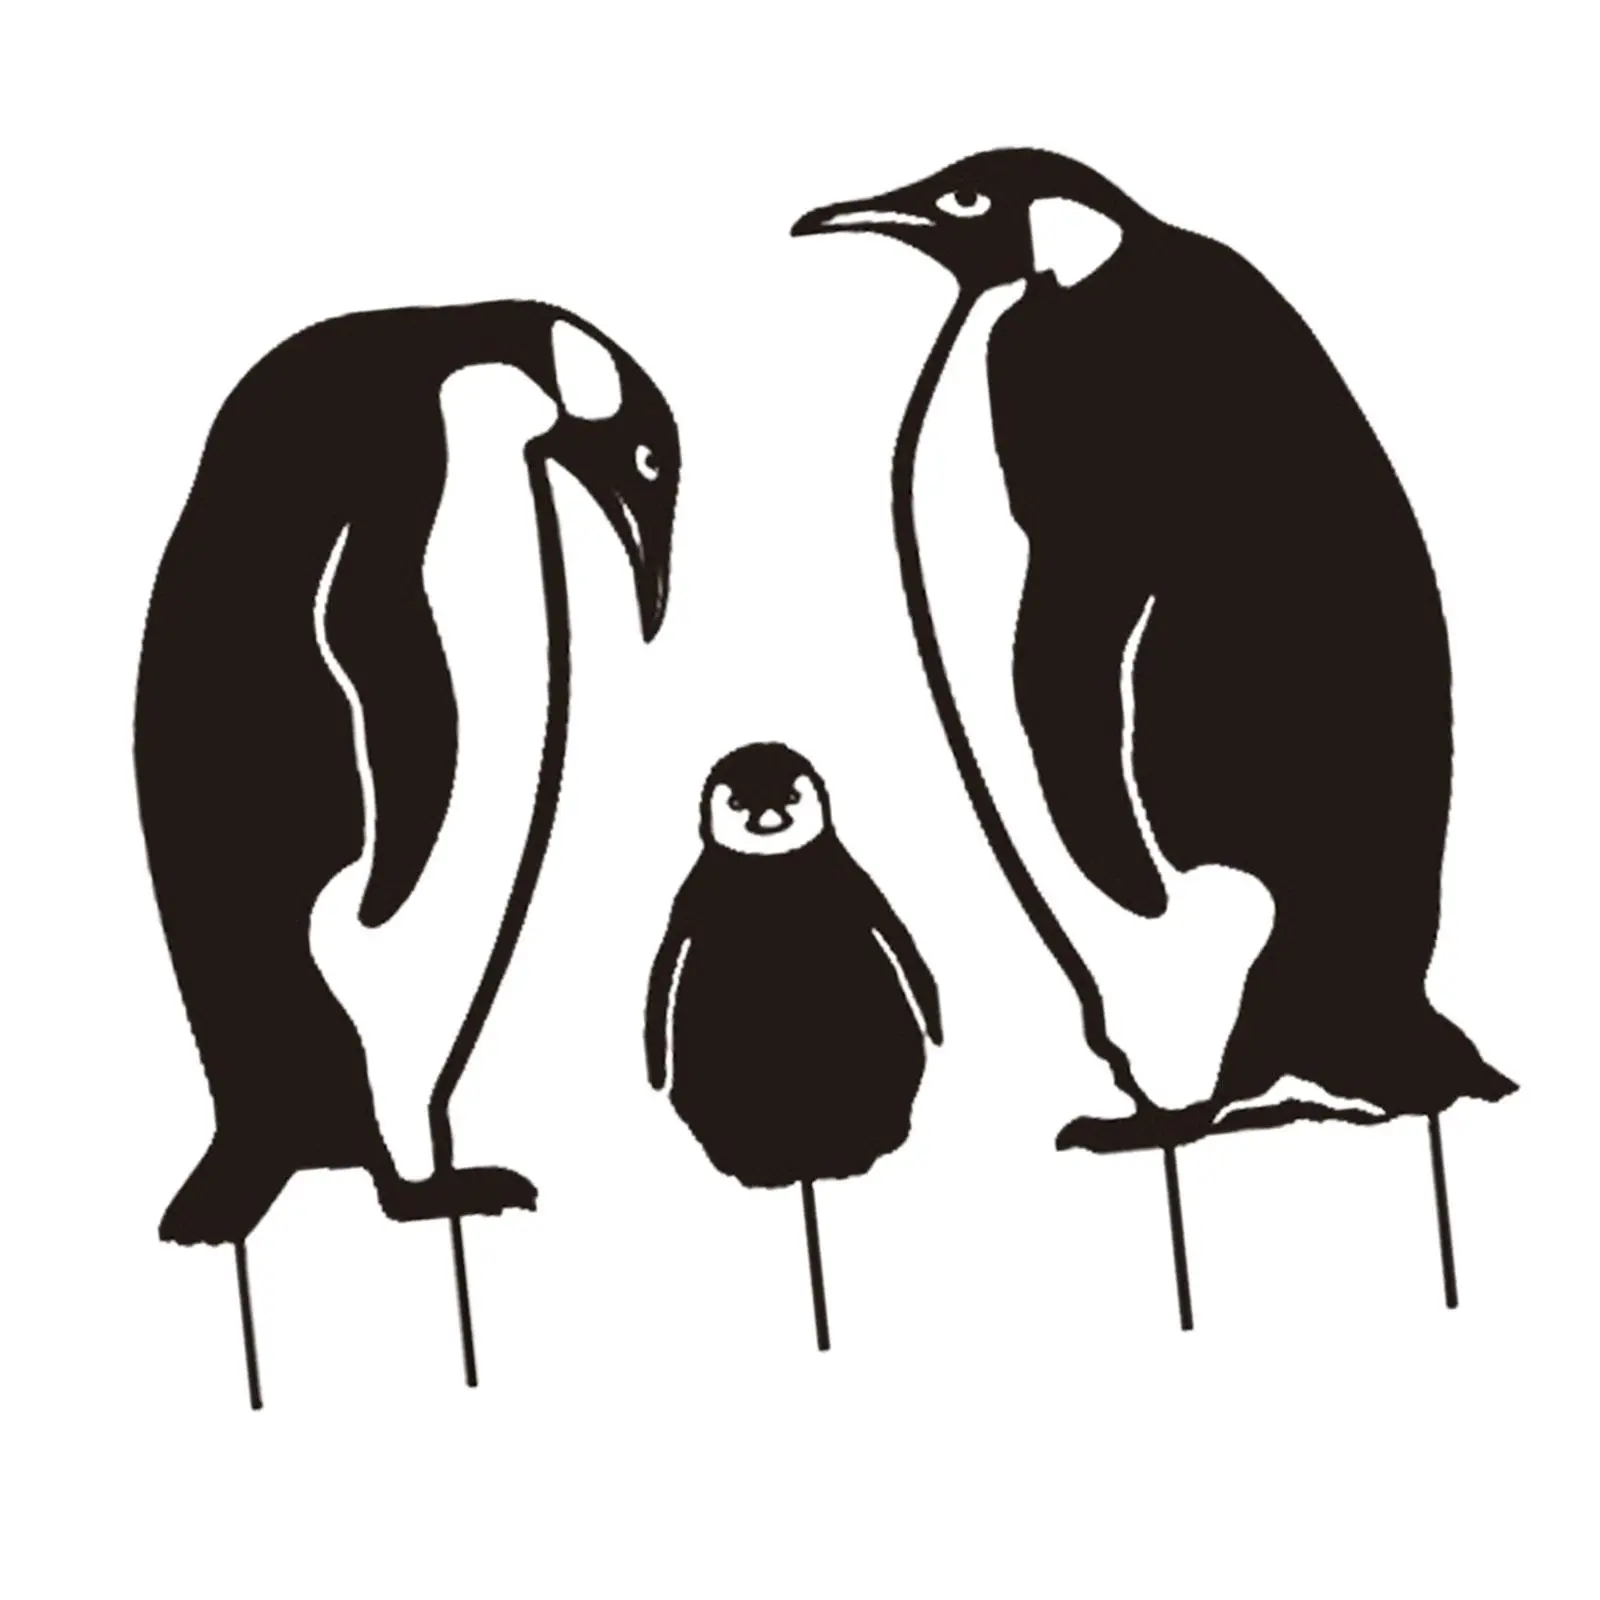 3 Pieces Penguin Crafts Yard Sign Figures Iron Garden Stakes Artificial Animal